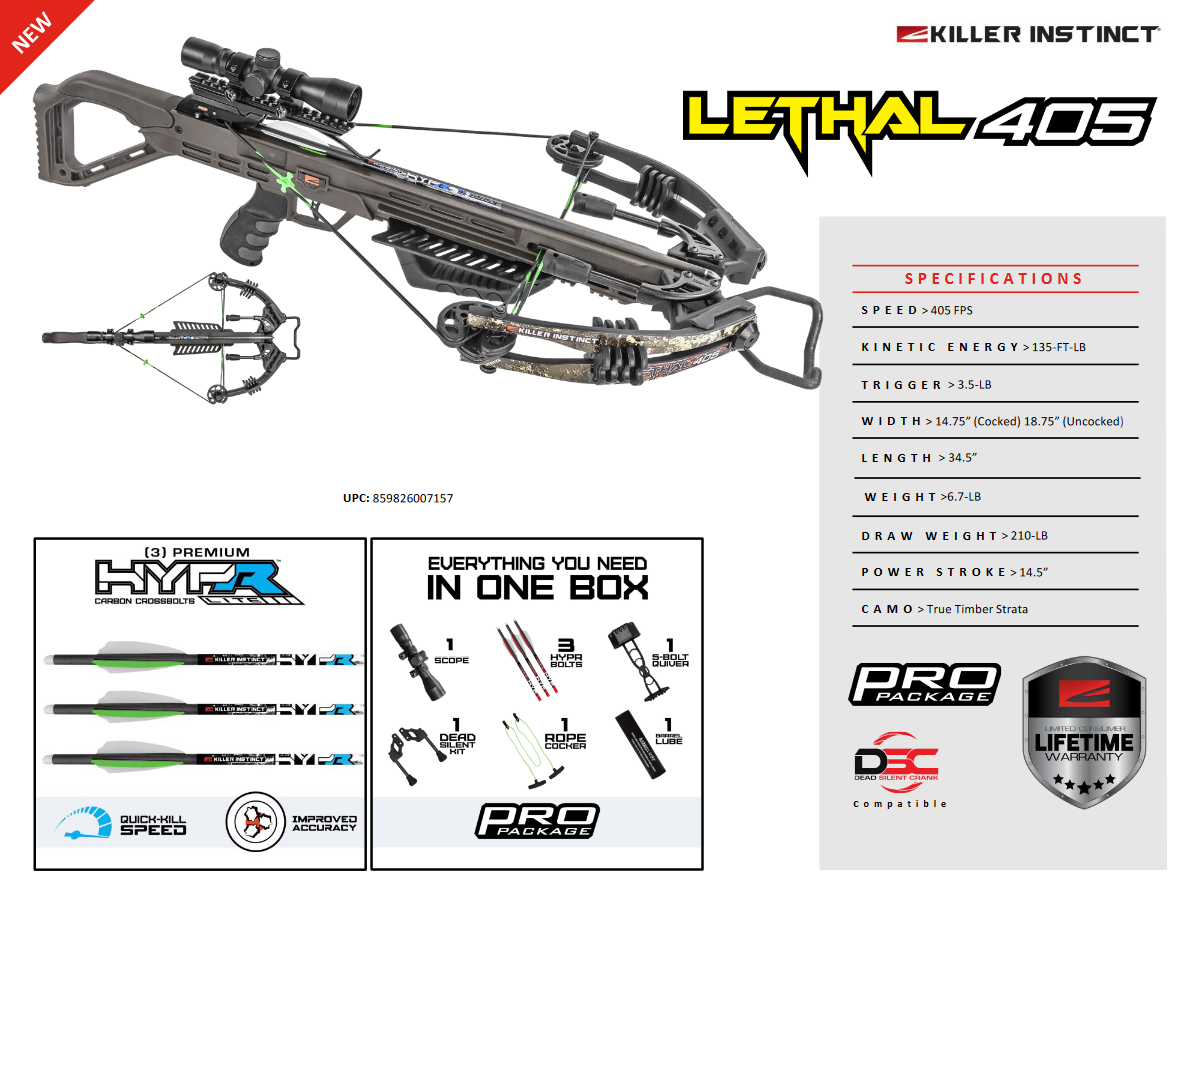 New 2021 Killer Instinct Lethal 405 4x32 Scope Crossbow Package